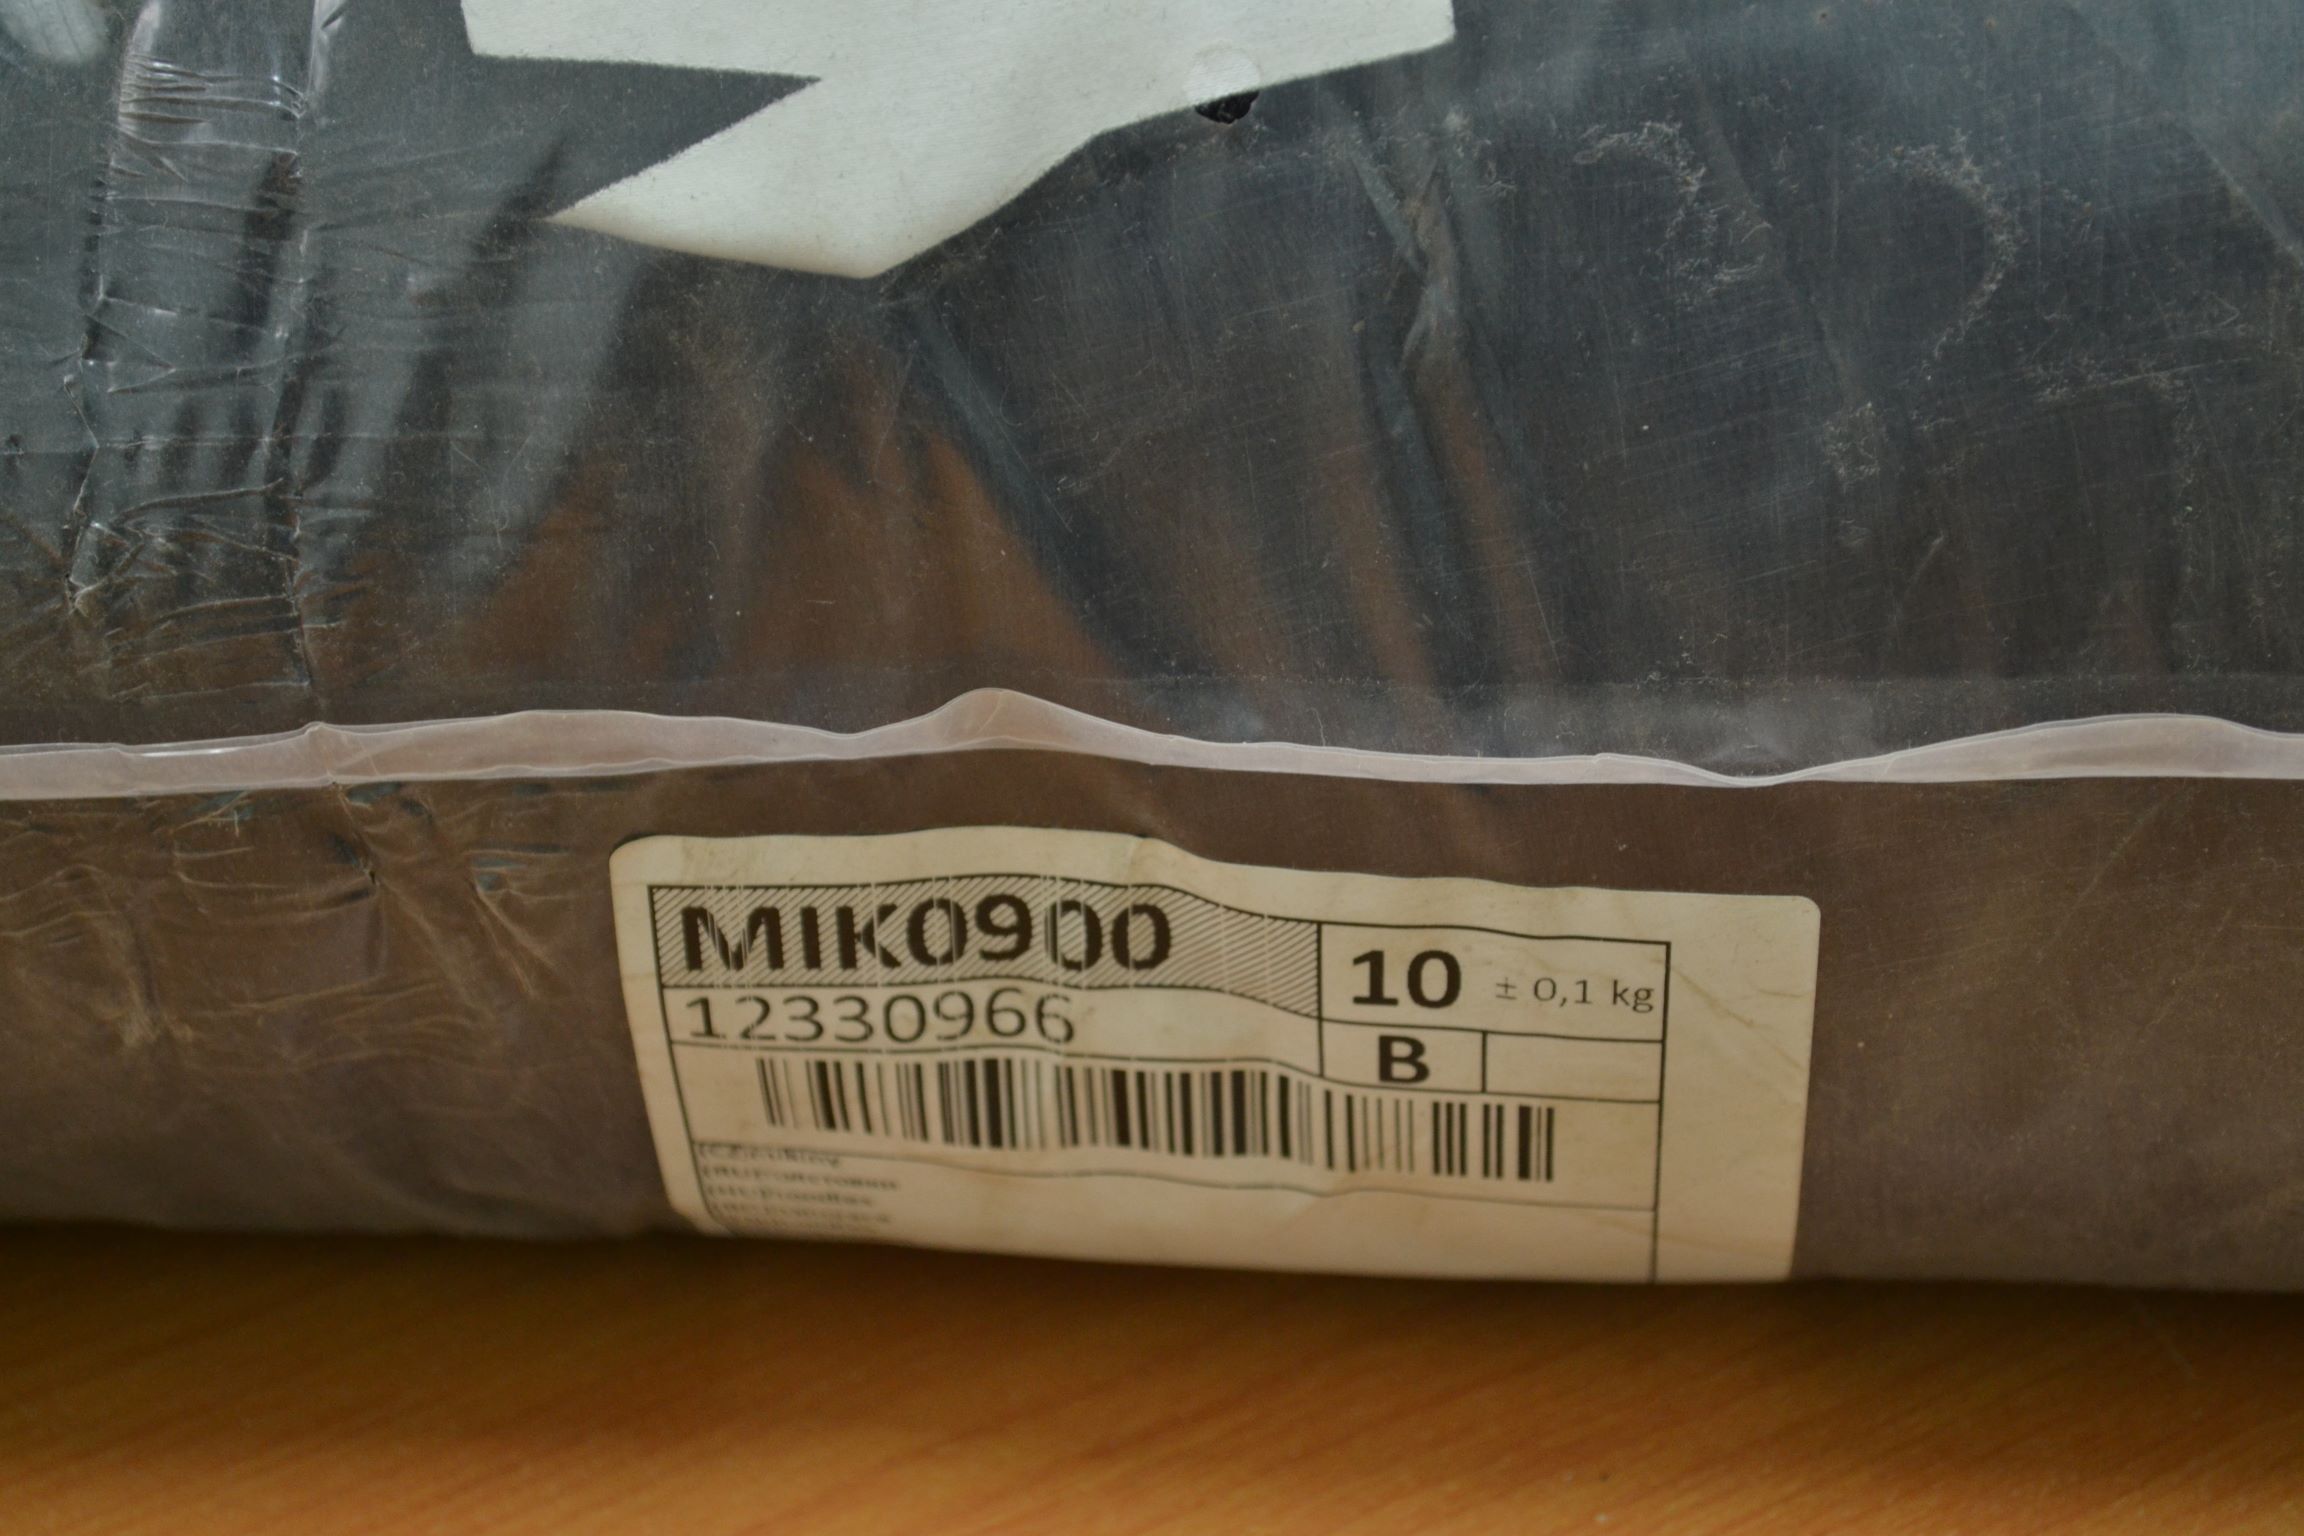 MIK0900; Толстовки; код мешка 12330966